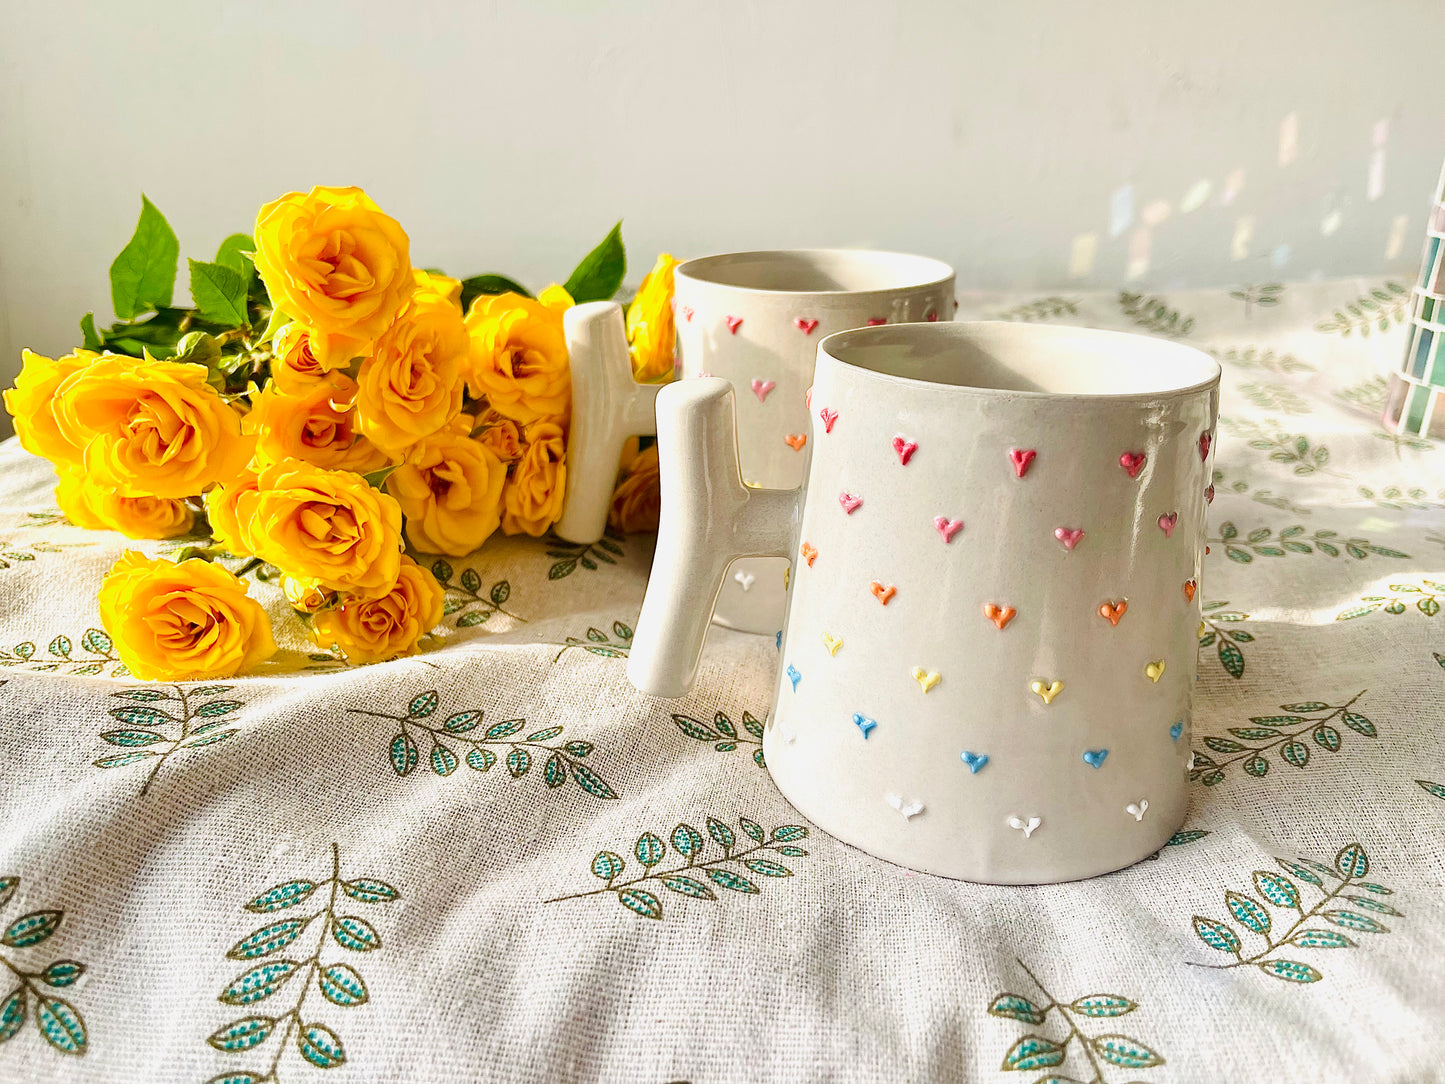 Adorable Rainbow Heart Handmade Ceramic Mug for Gifts